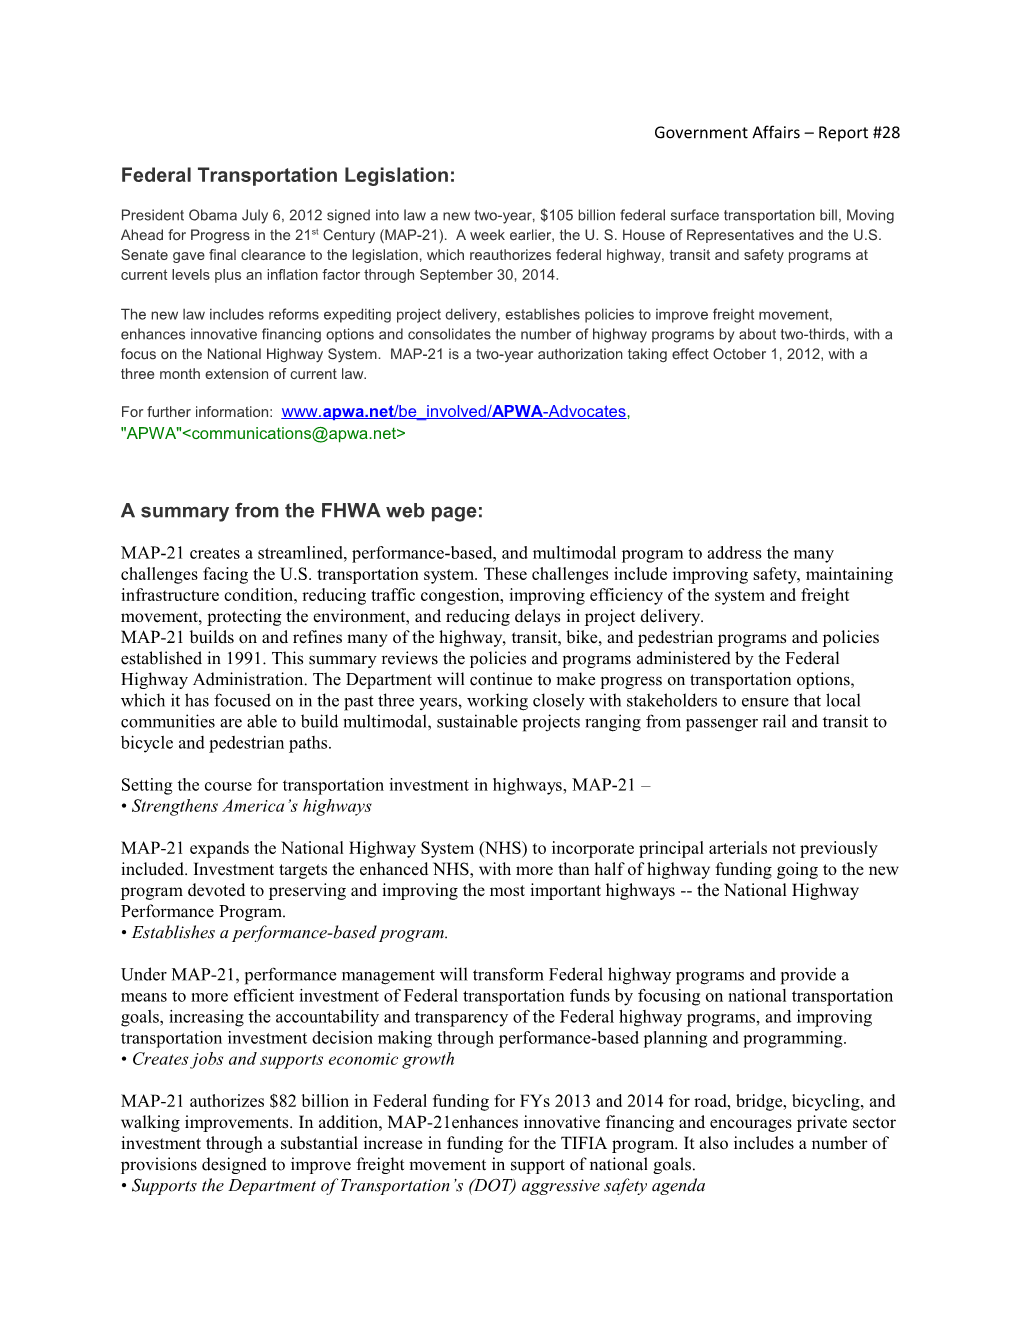 Federal Transportation Legislation